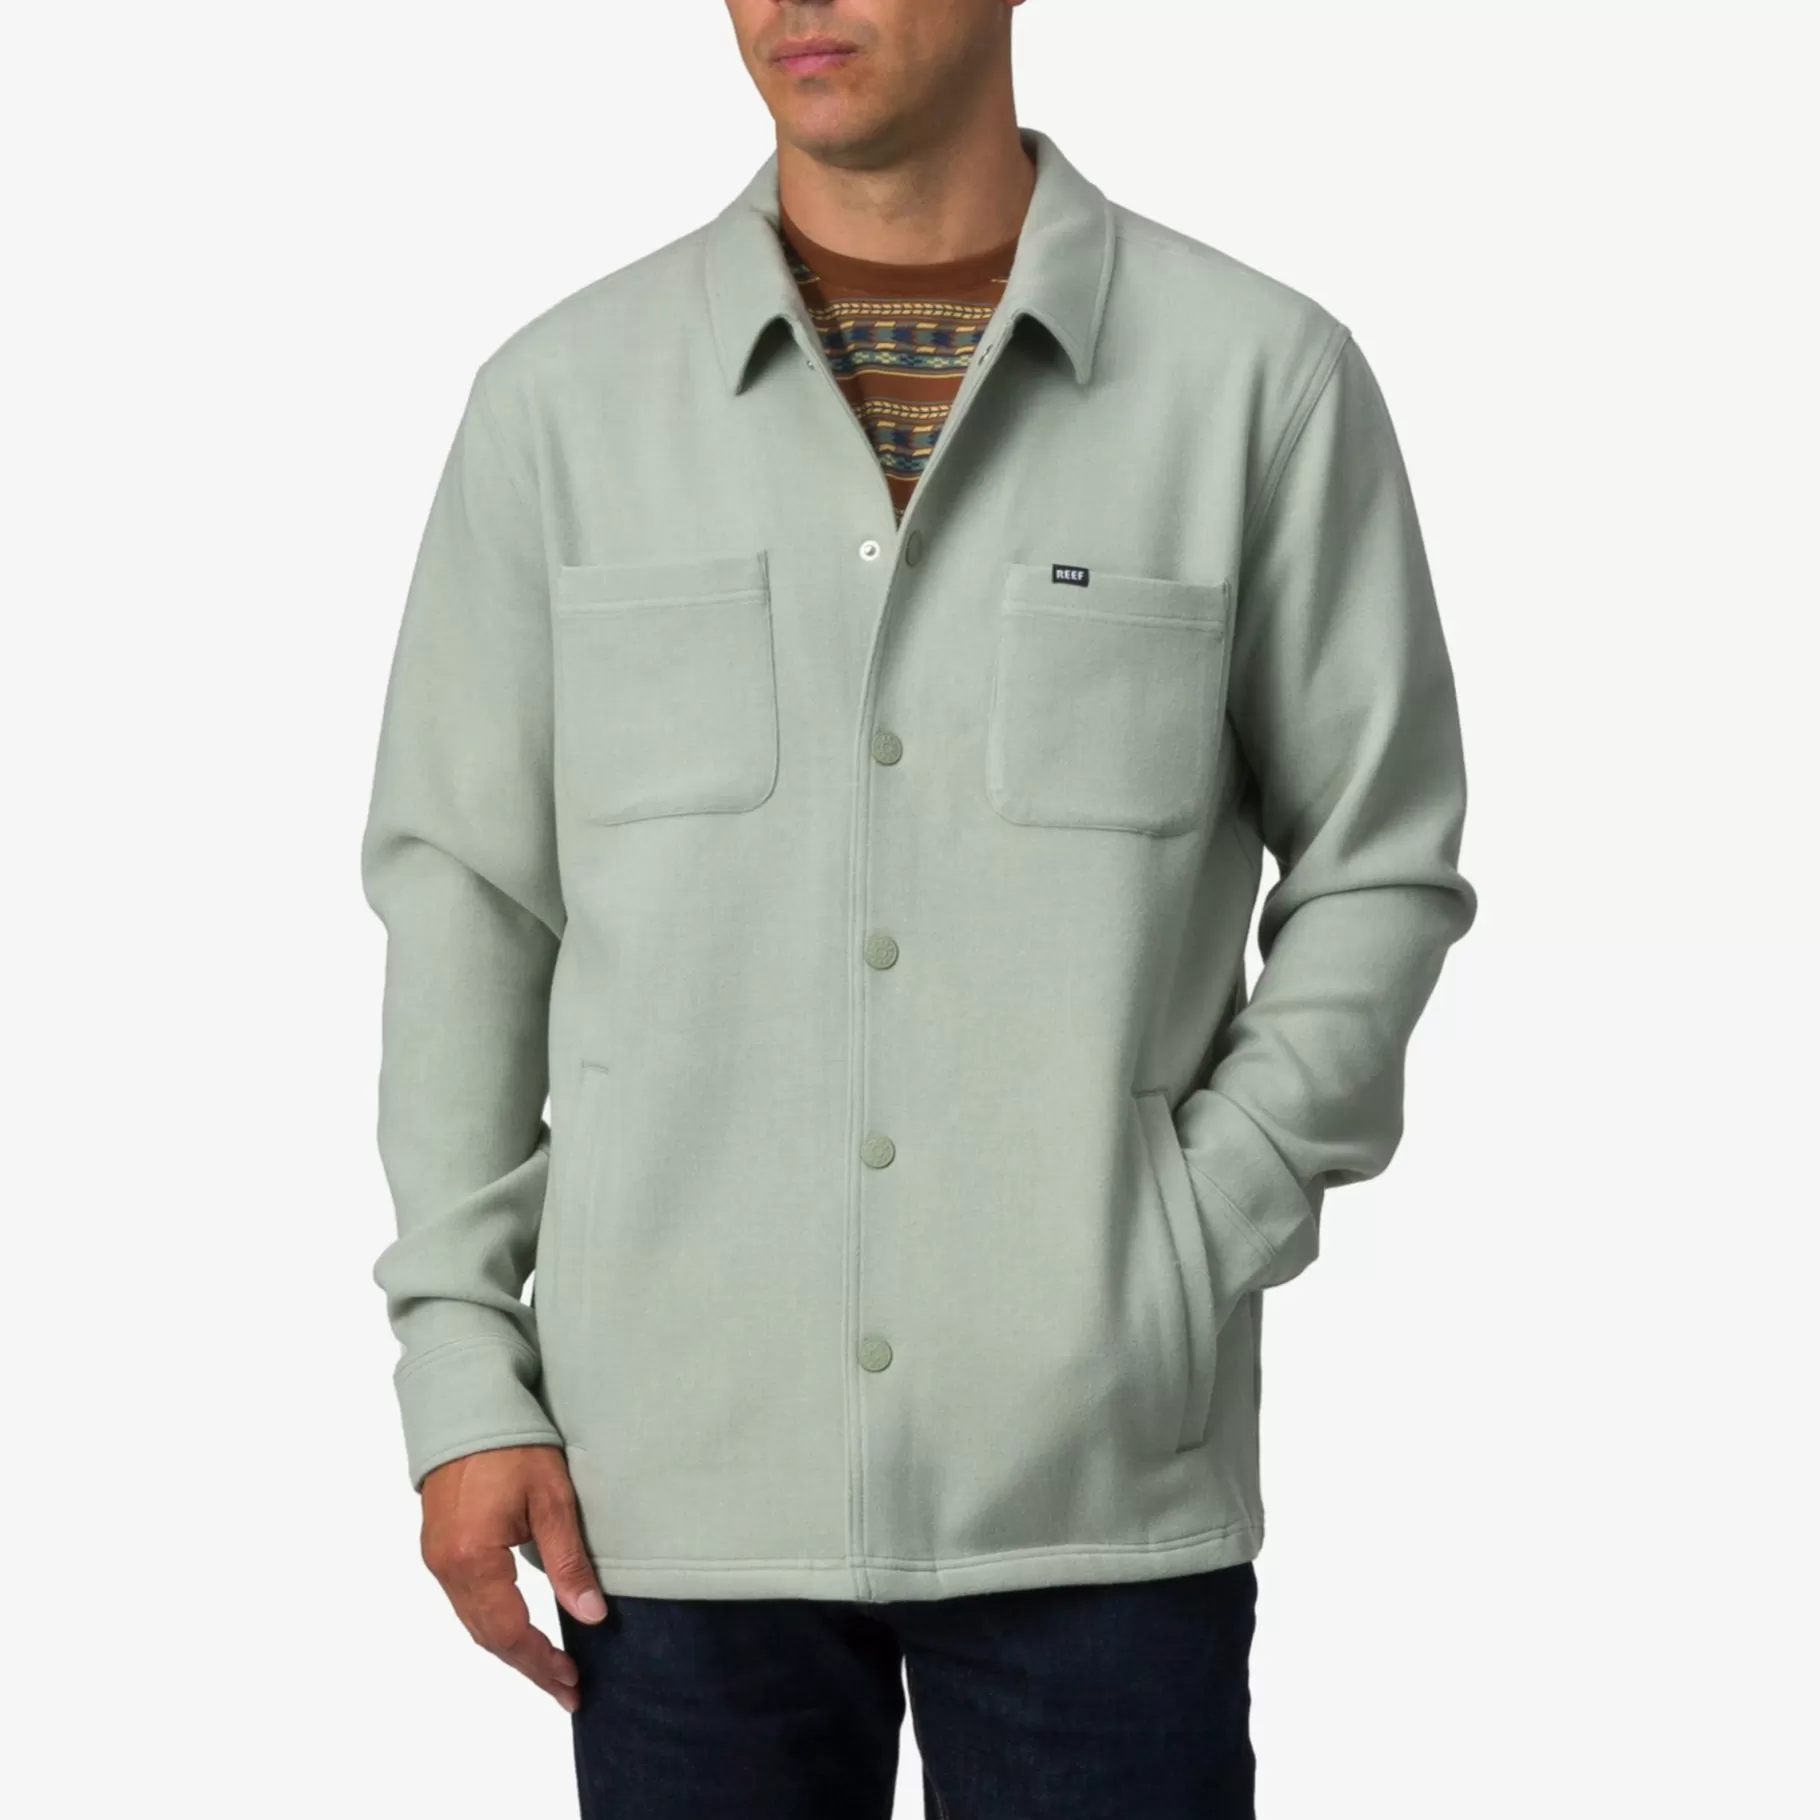 Men REEF Shirts>Weston Flannel Jacket